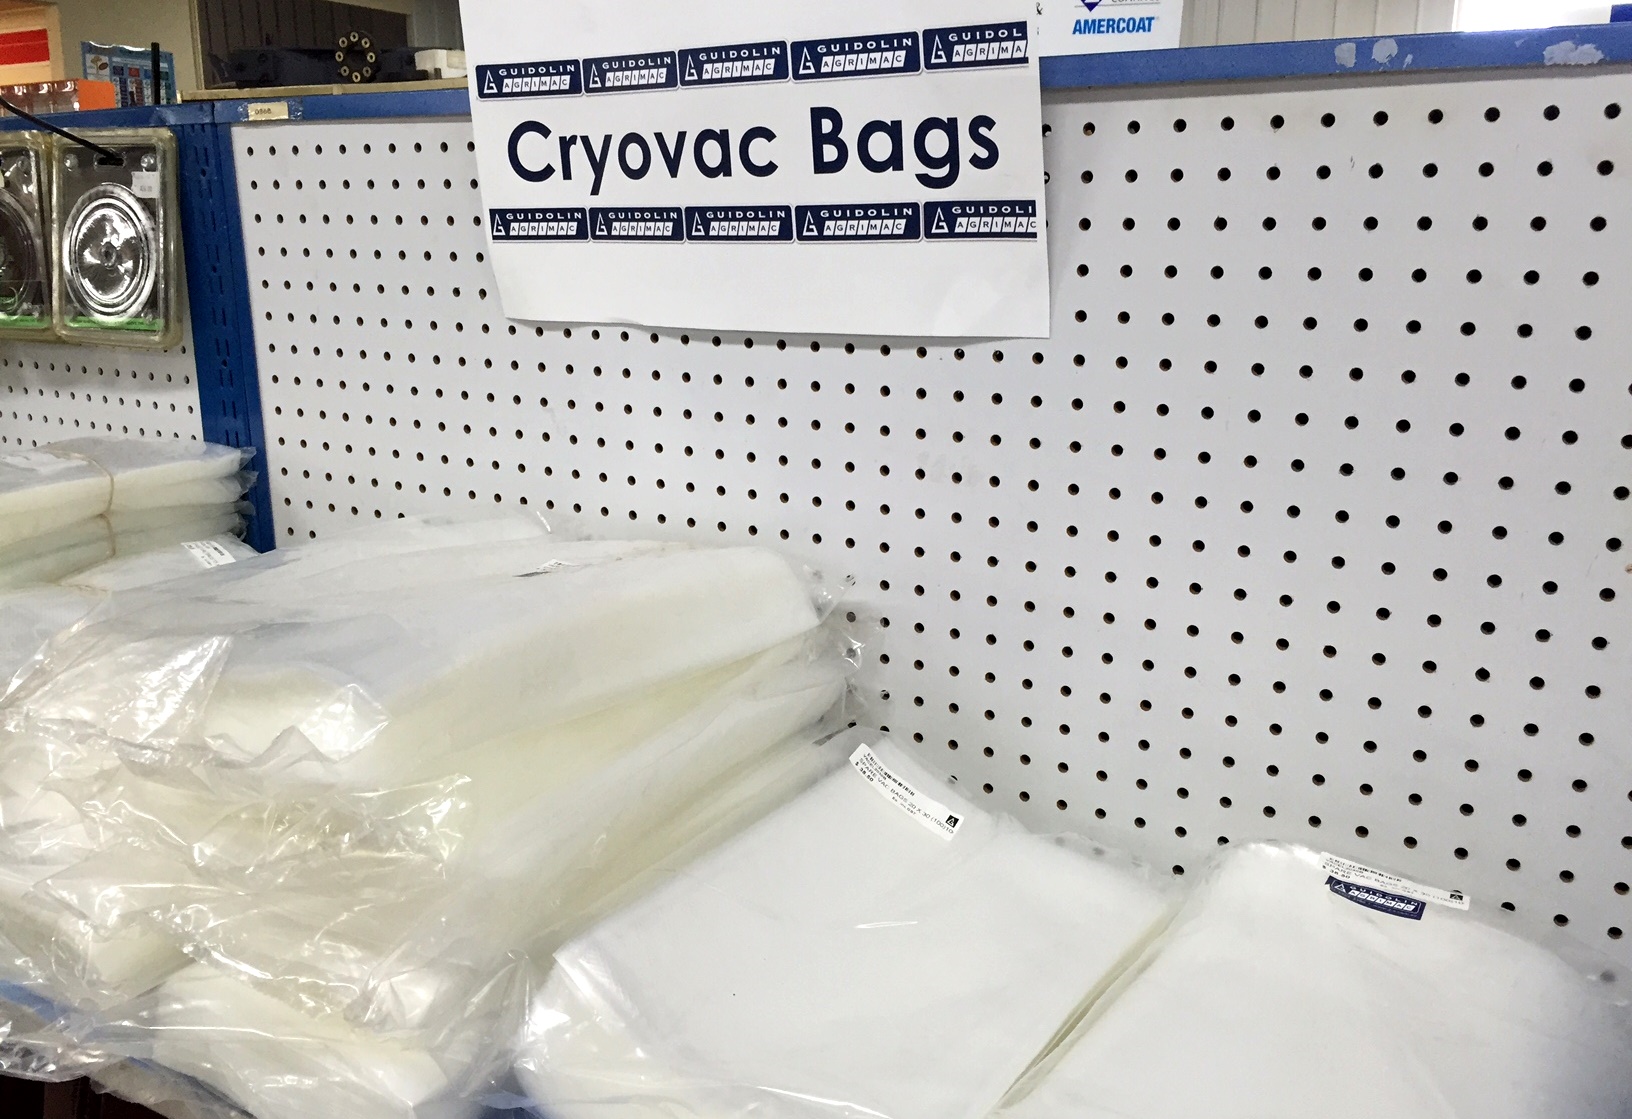 Cryovac bags